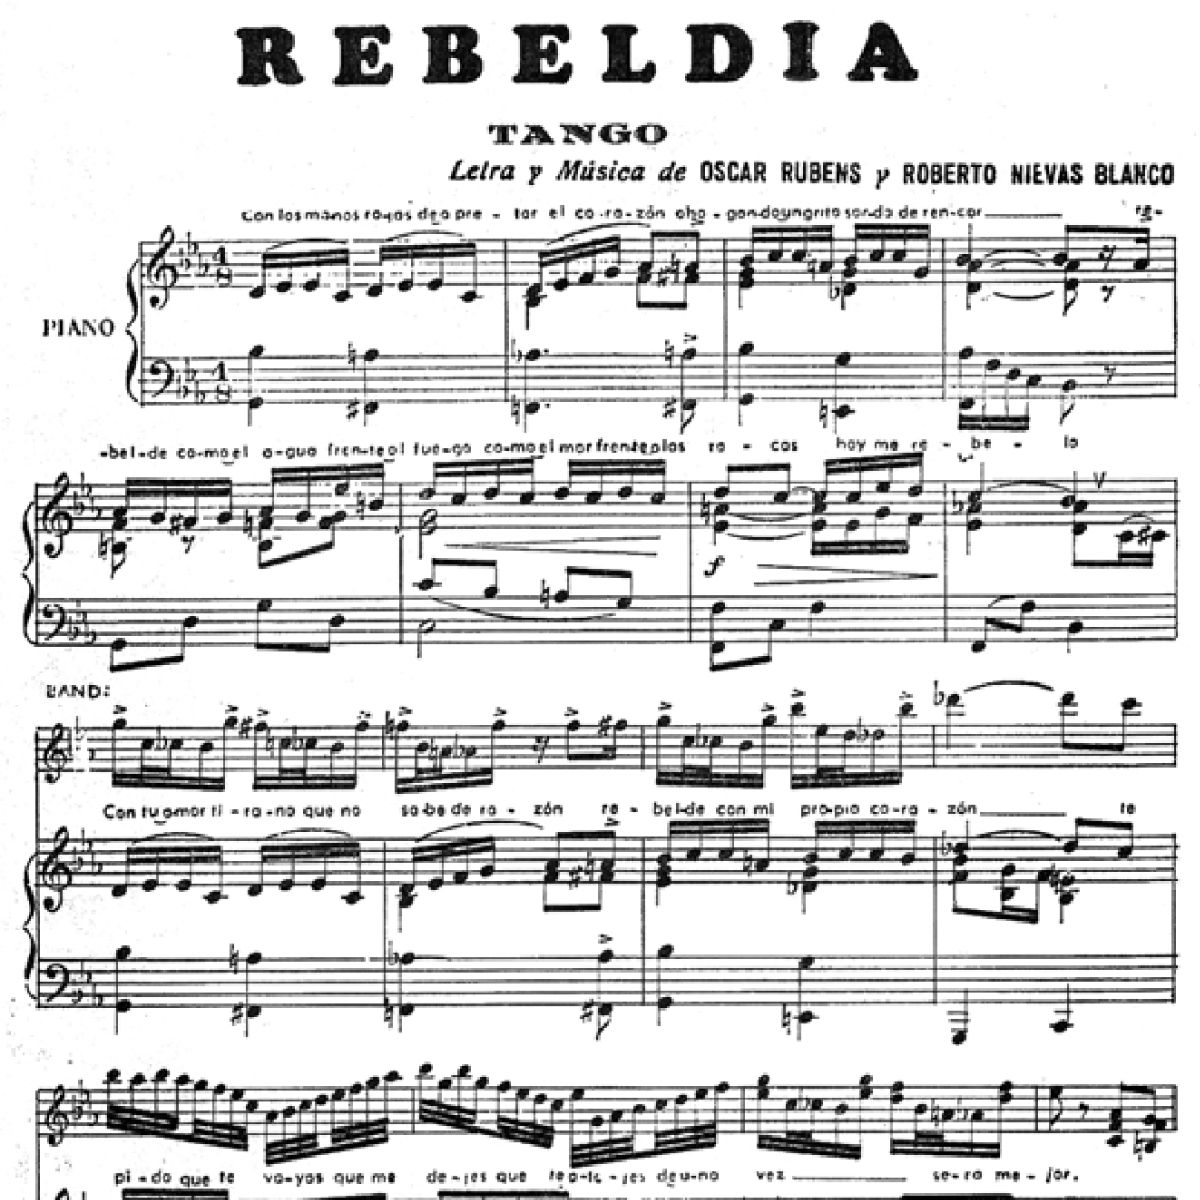 "Rebeldía", Argentine Tango music score